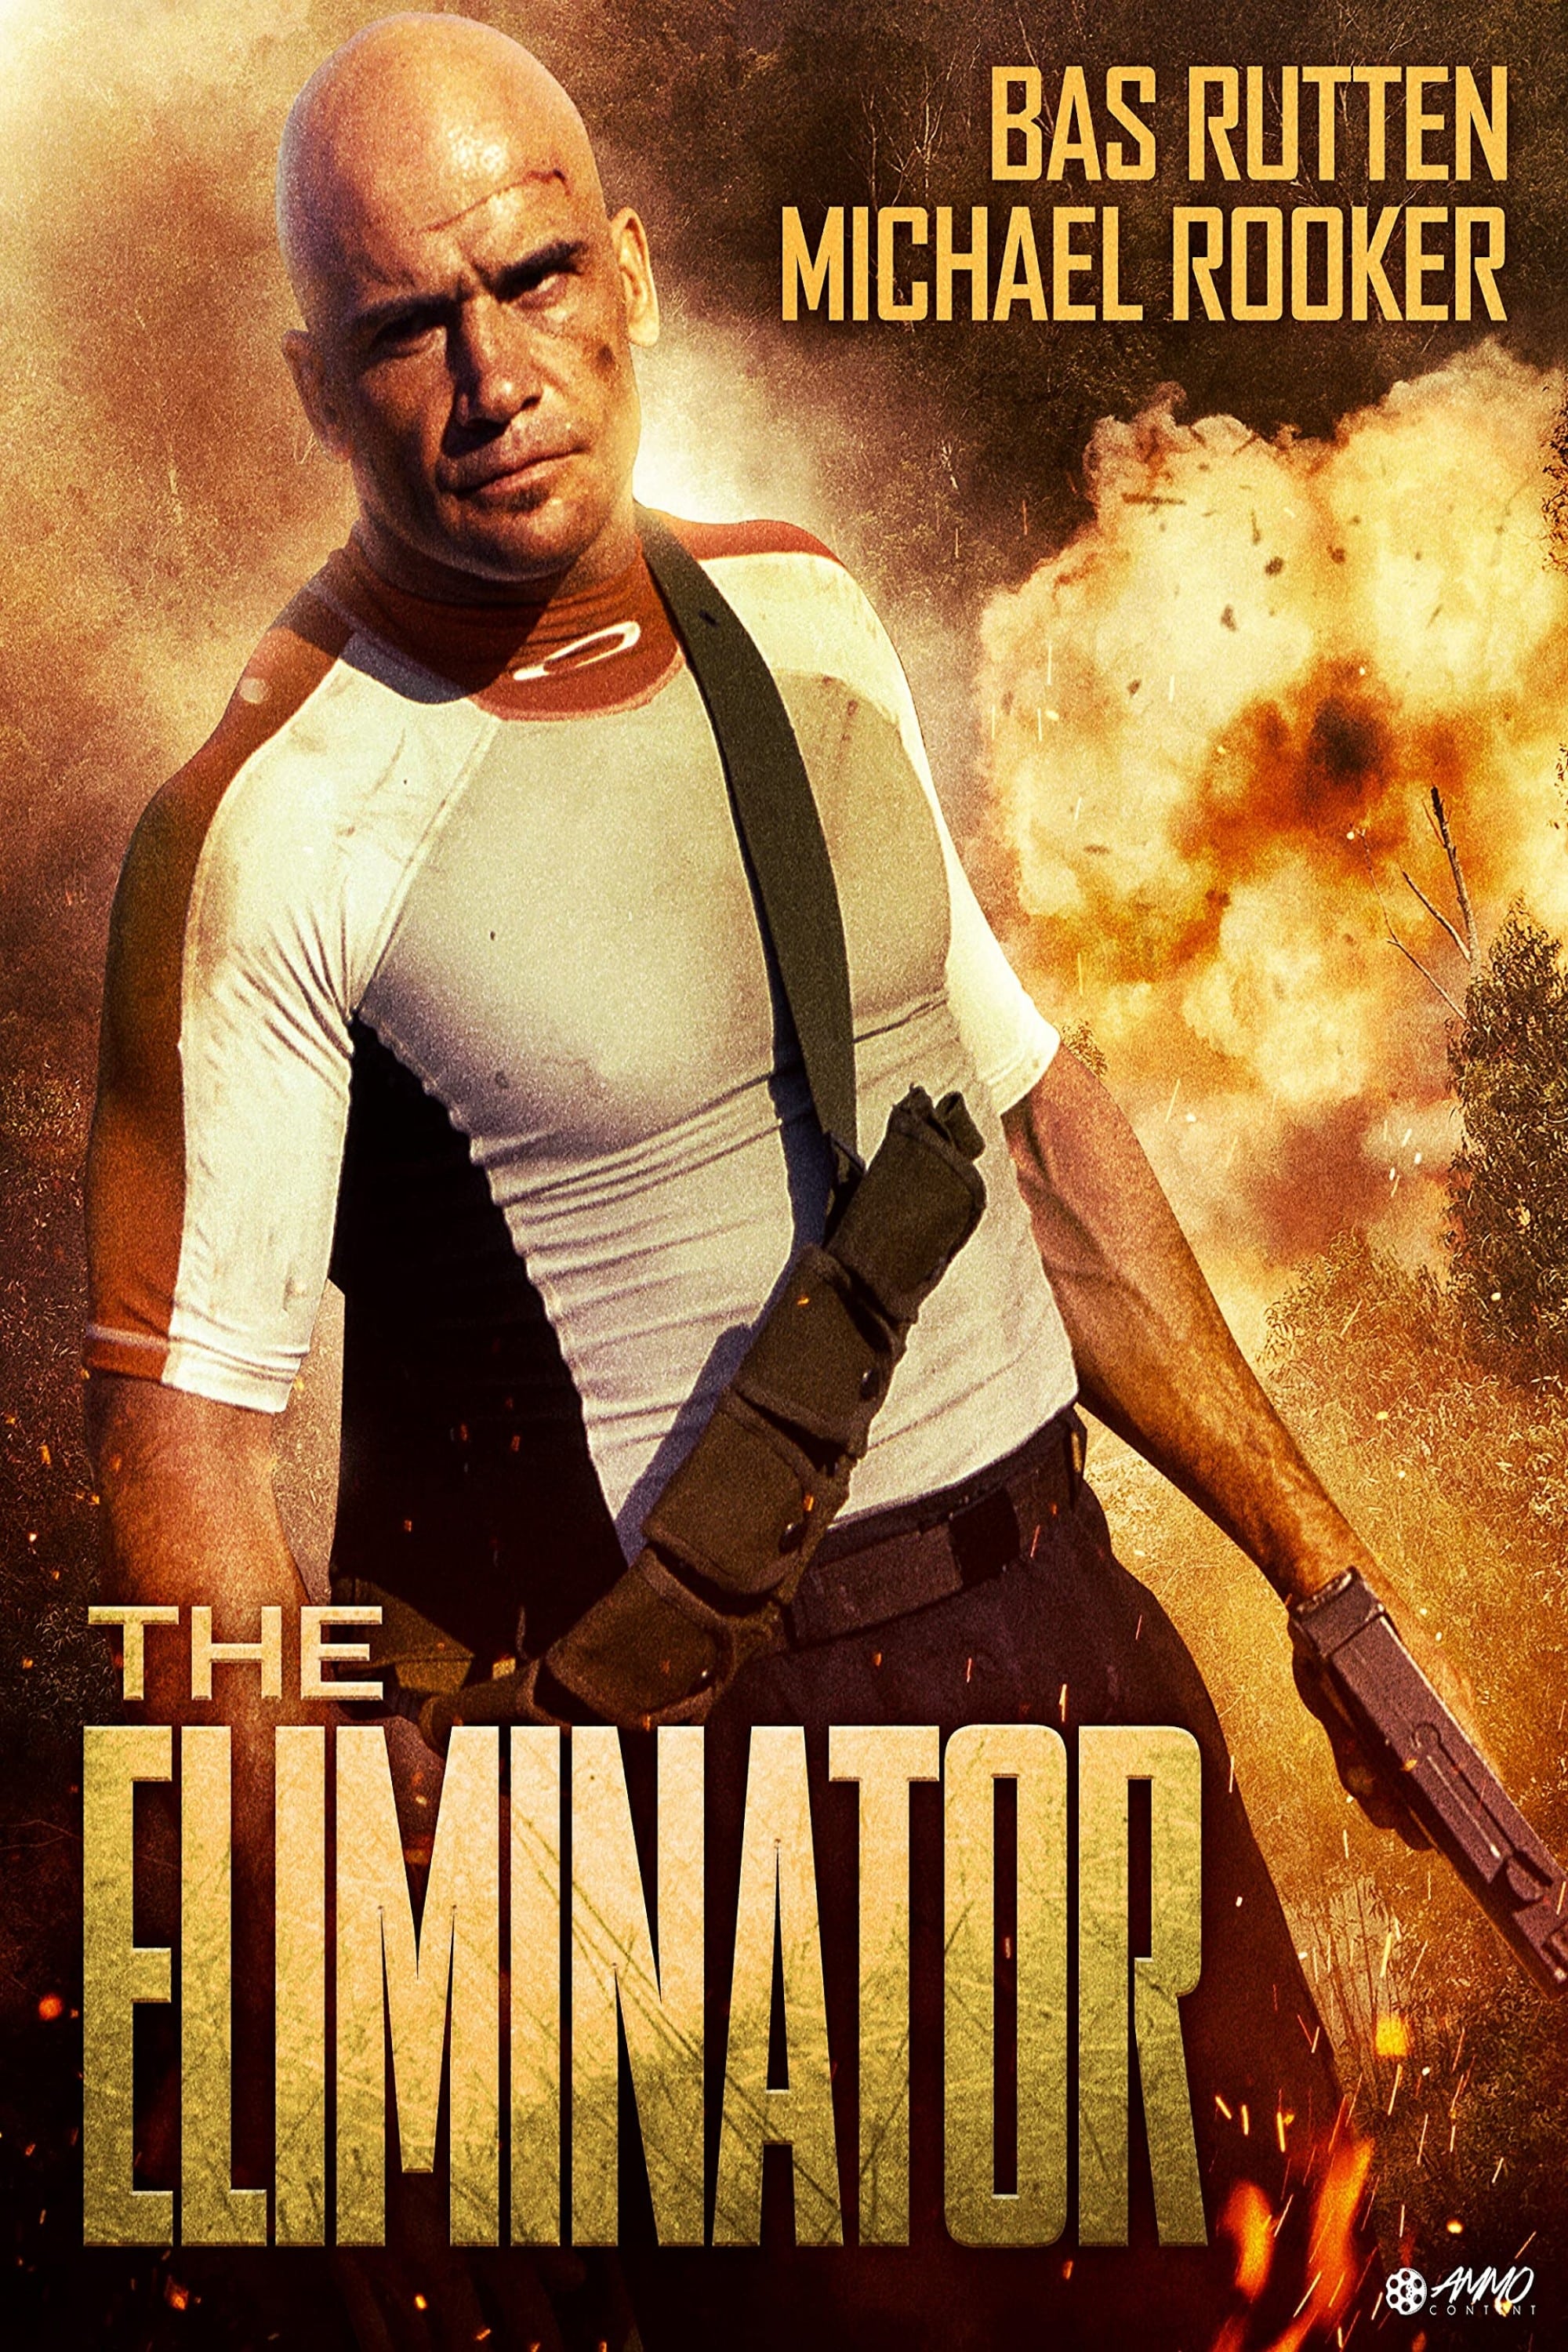 The Eliminator (2004)